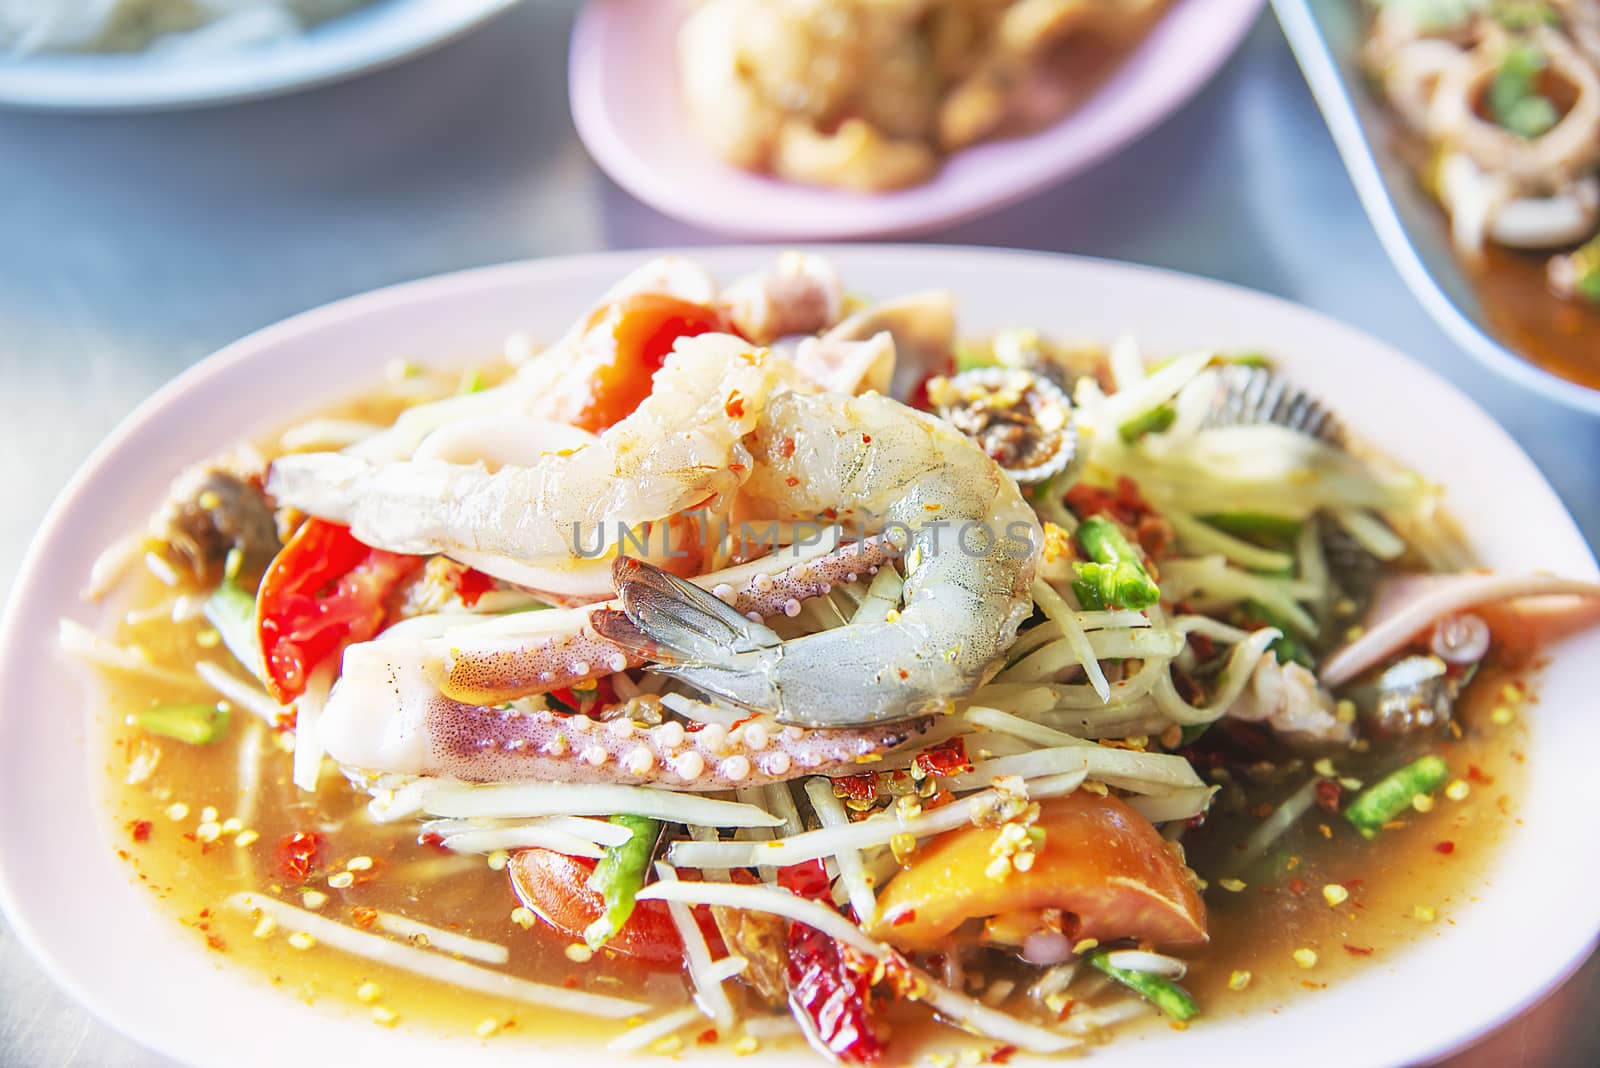 Thai spicy seafood papaya salad - Thai famous food recipe